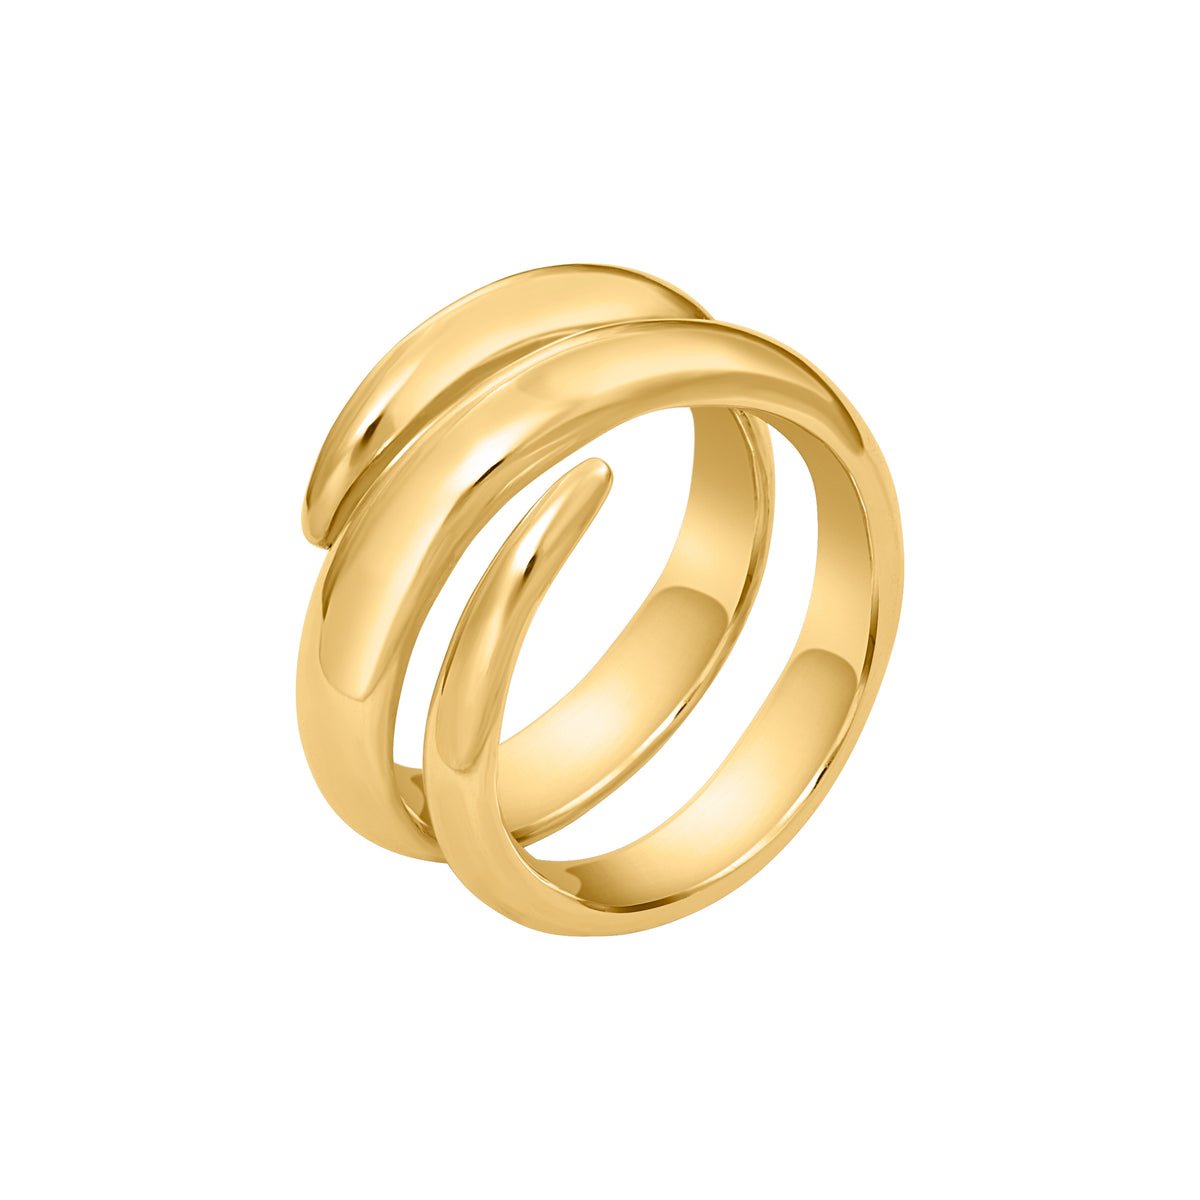  VIKA jewels ring silber 18 karat vergoldet gold recycling recycled sterling silver schmuck handgemacht bali Kombination clasp spiral finger